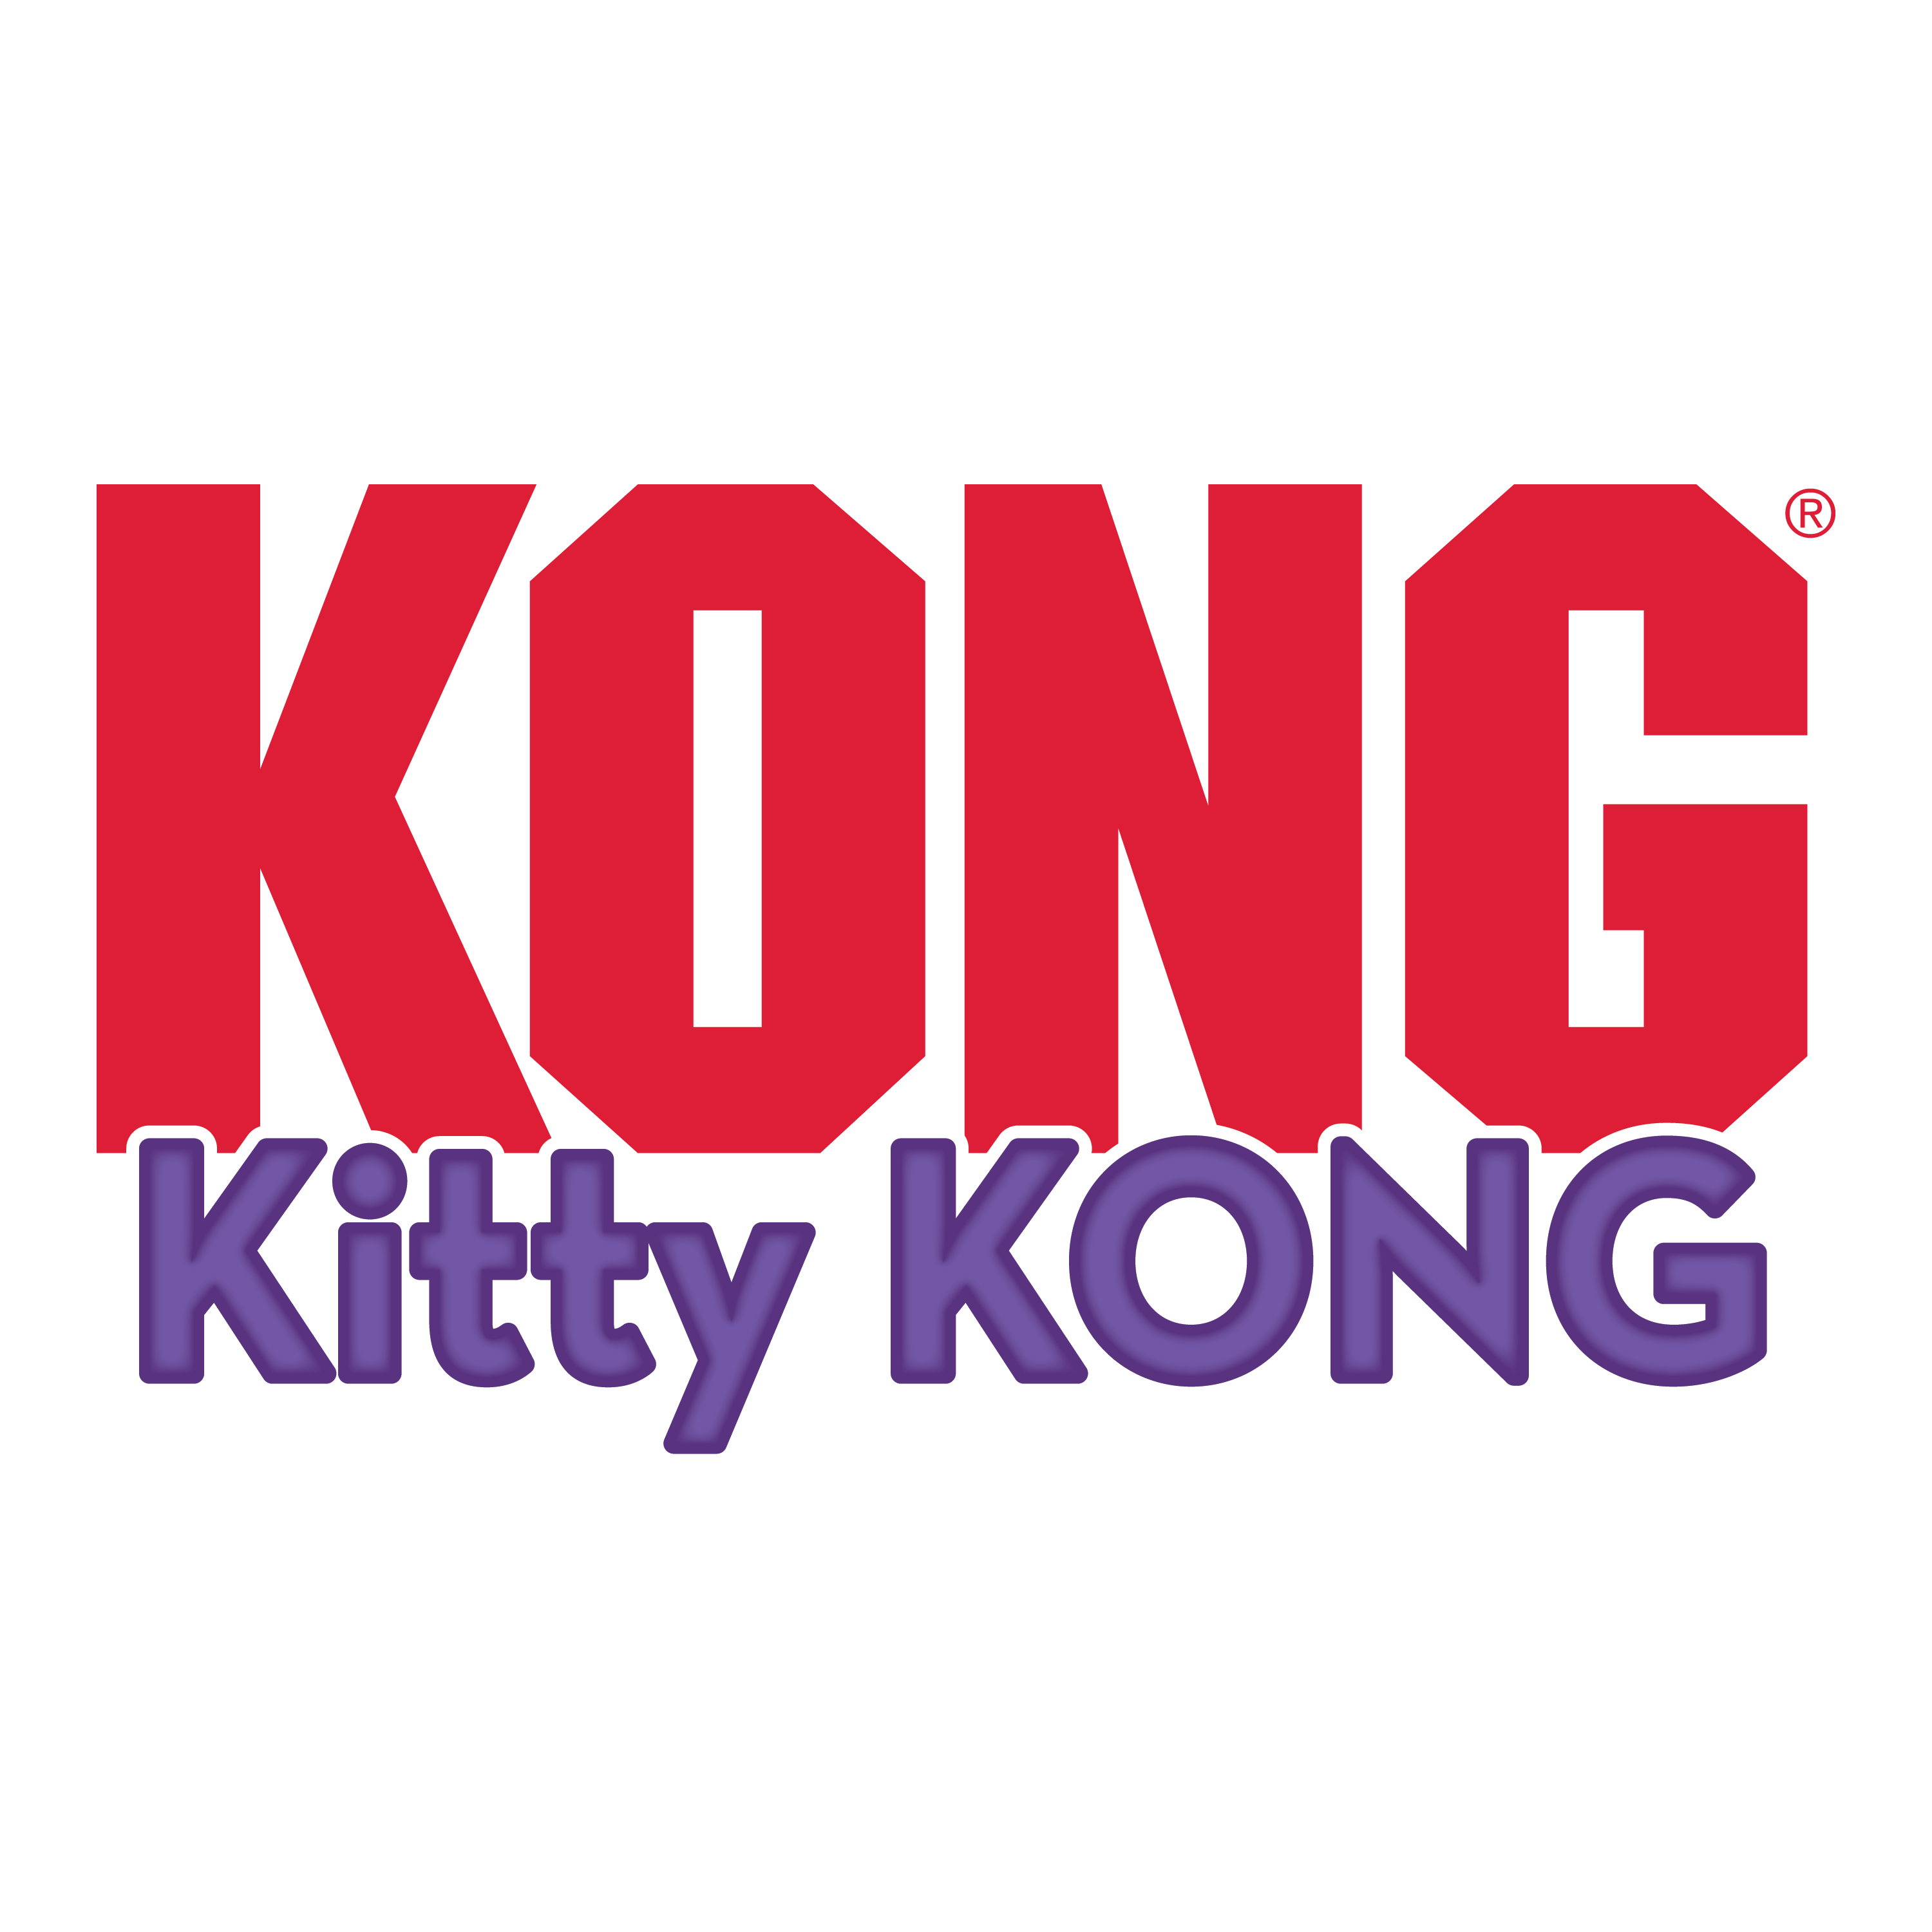 Kitty KONG alt1 imagen de producto